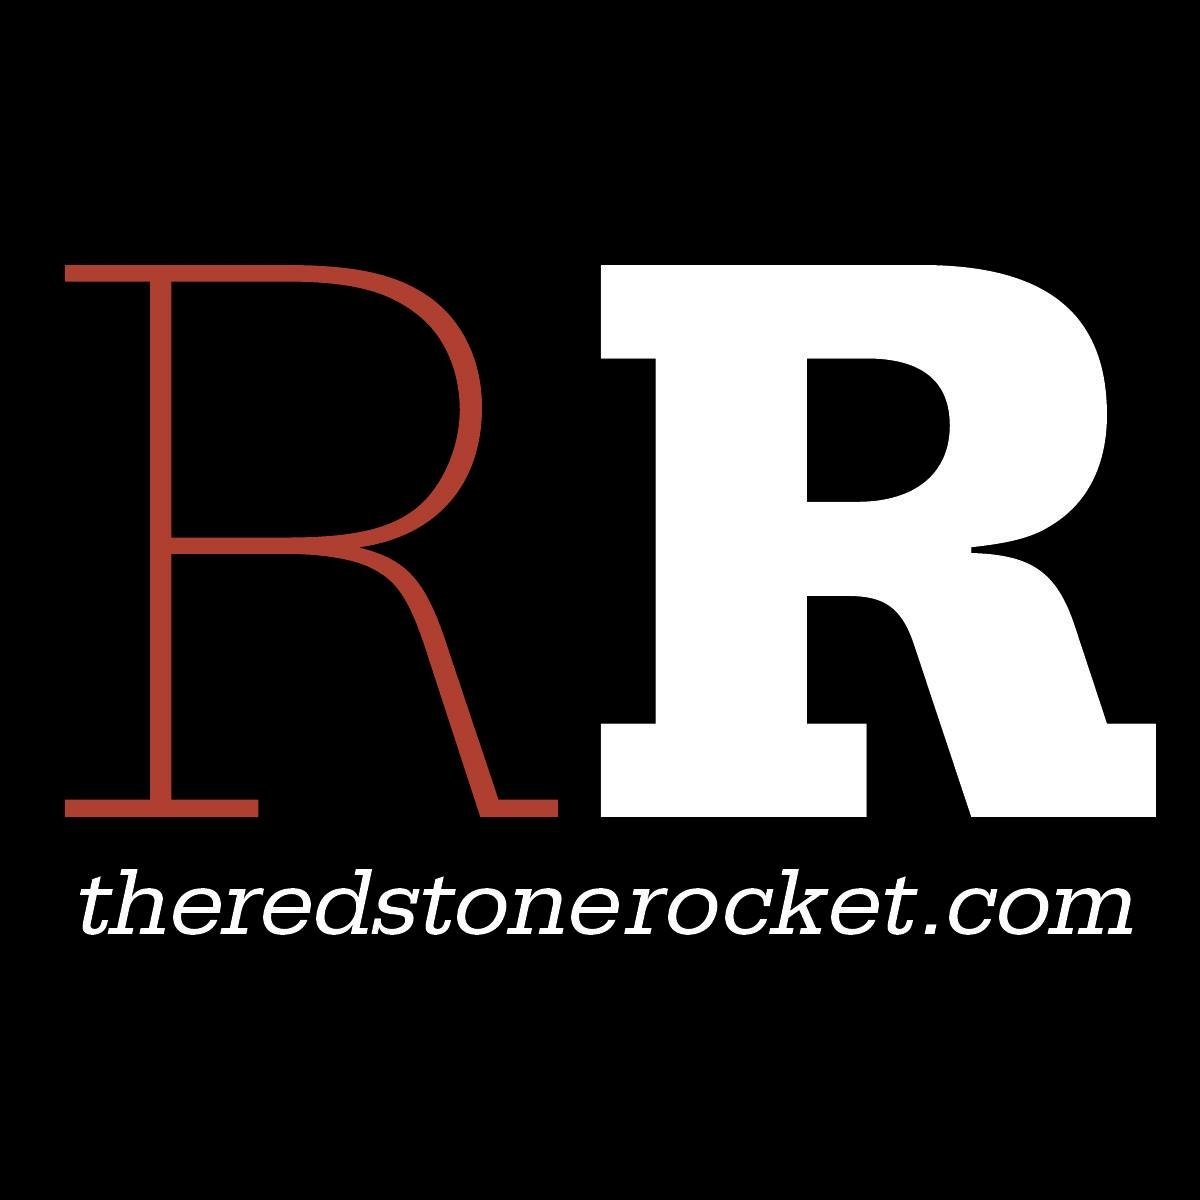 redstone_rocket_logo.jpeg